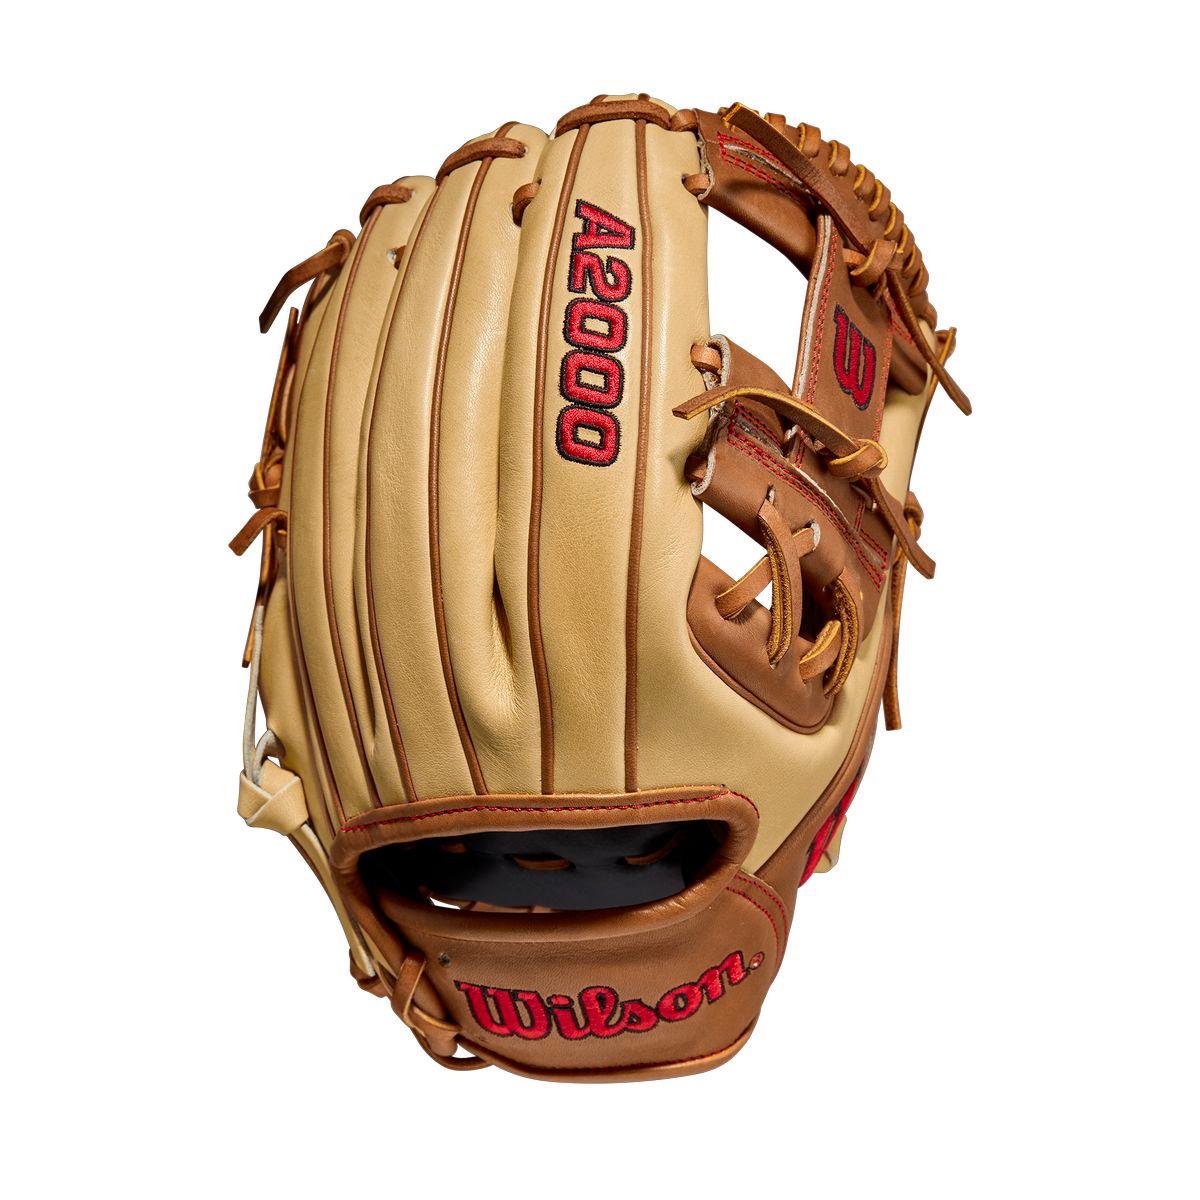 A2000 1786 11.5" Senior Baseball Glove - Sports Excellence